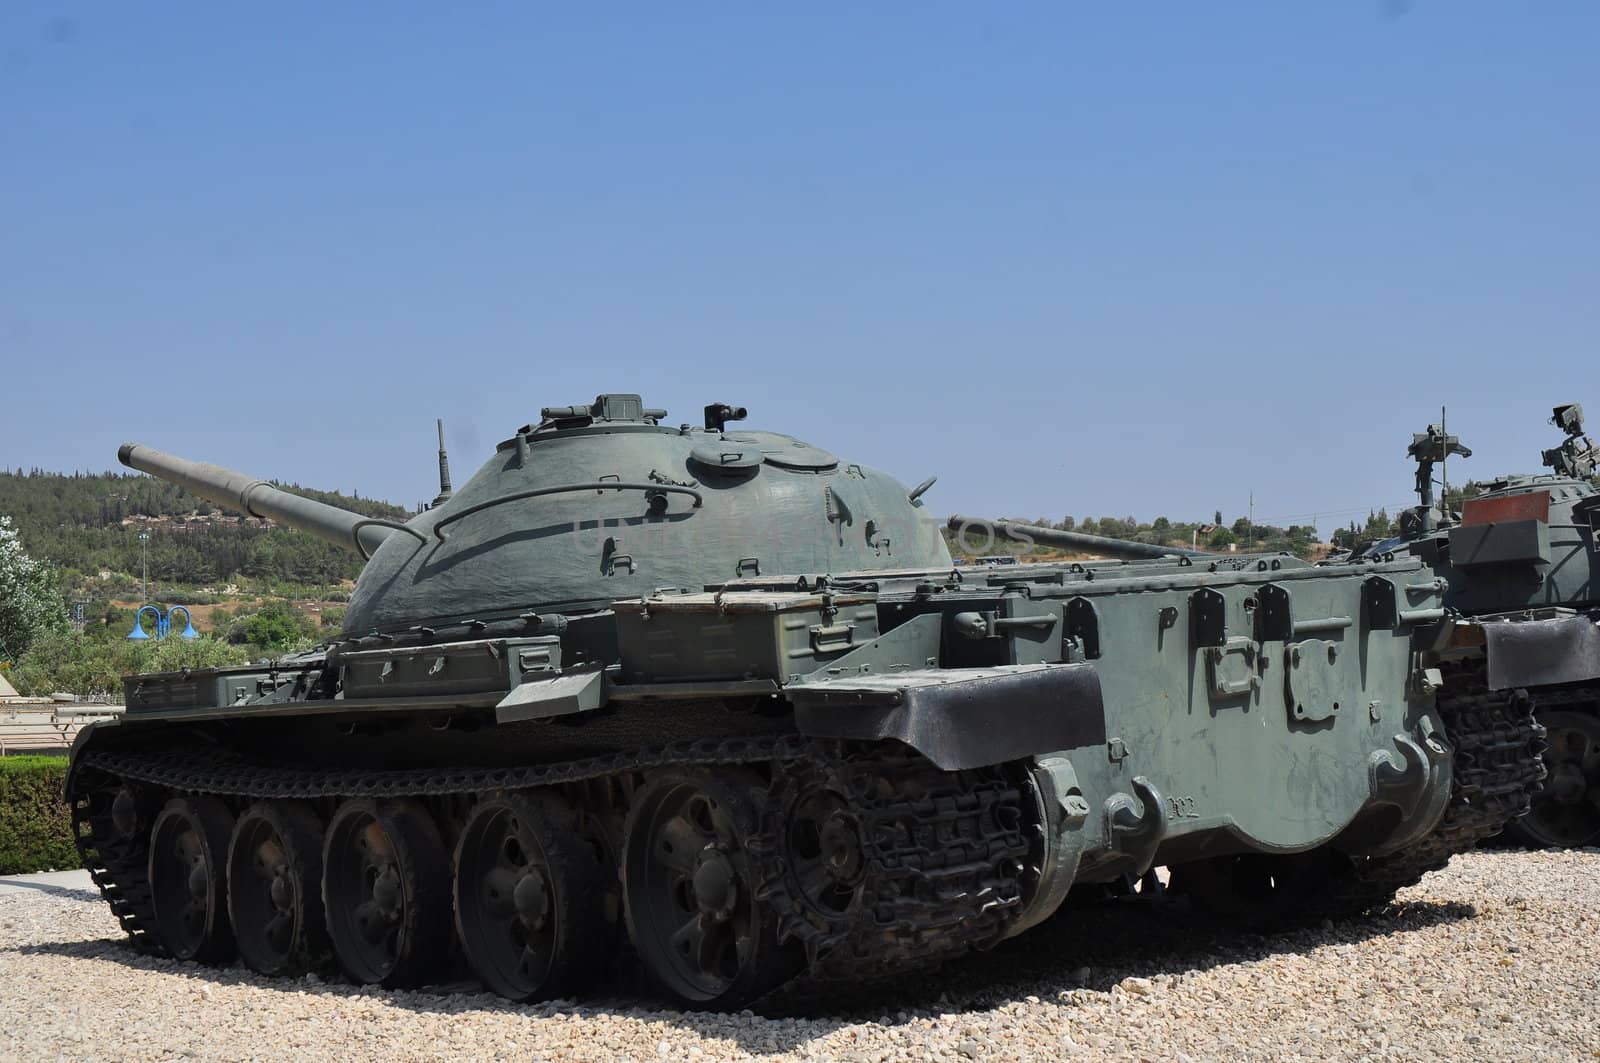 Old tank against the blue sky . Israel, Latrun.